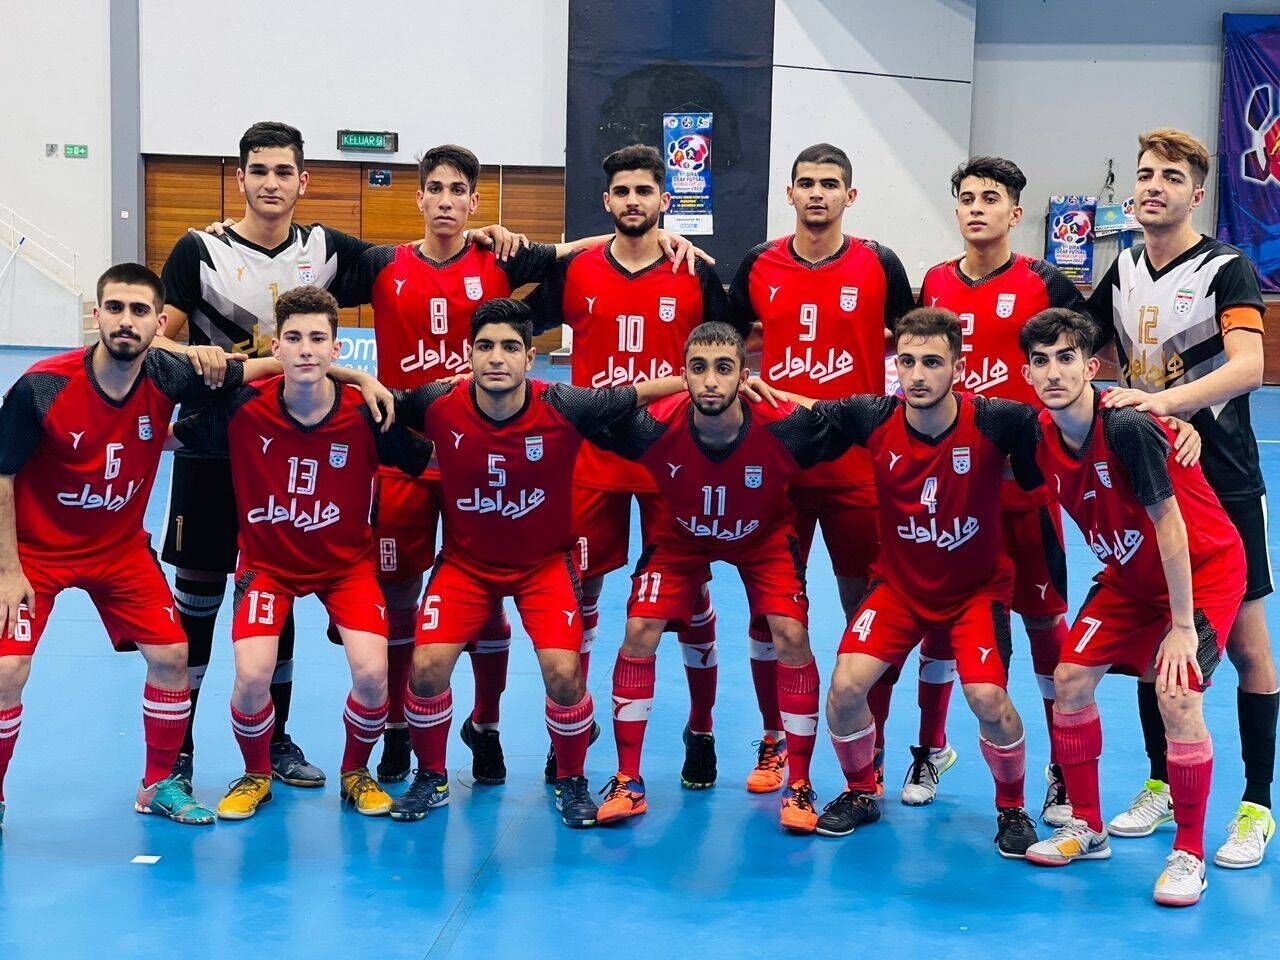 Сборная Ирана по мини-футболу по спорту глухих до 21 лет вышла в финал Кубка мира